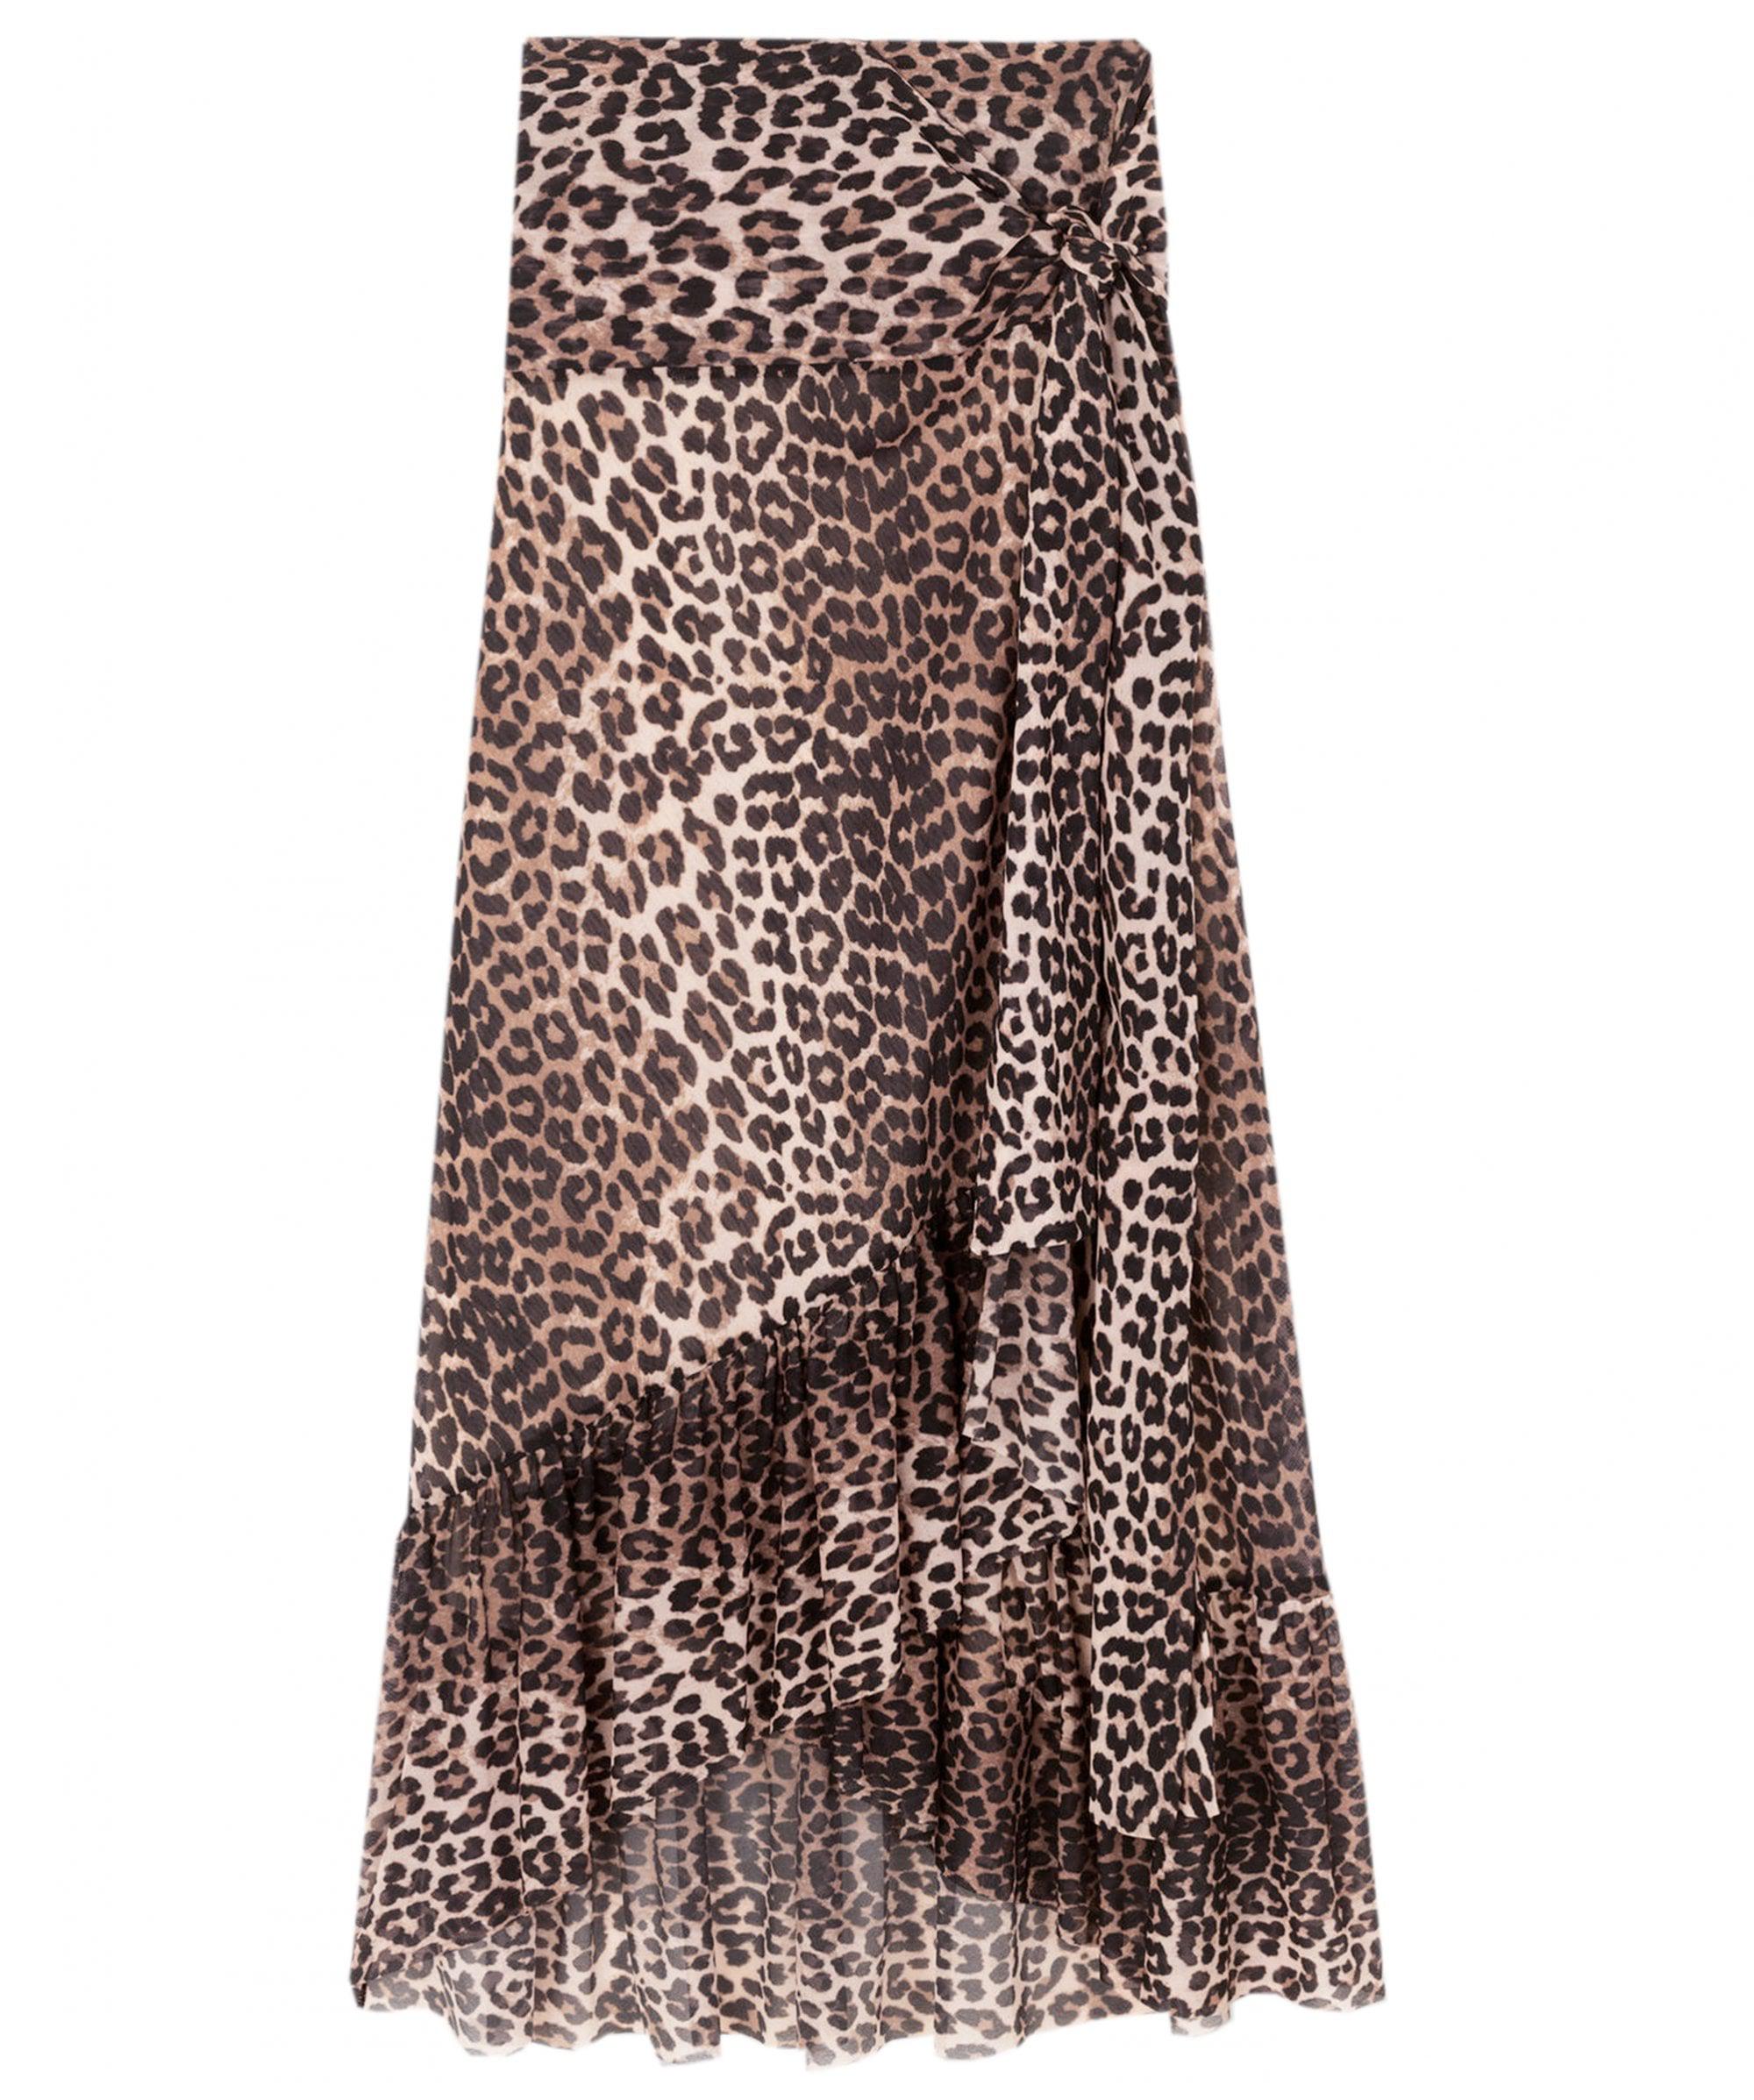 Lyst - Ganni Tilden Leopard Print Mesh Wrap Skirt in Brown